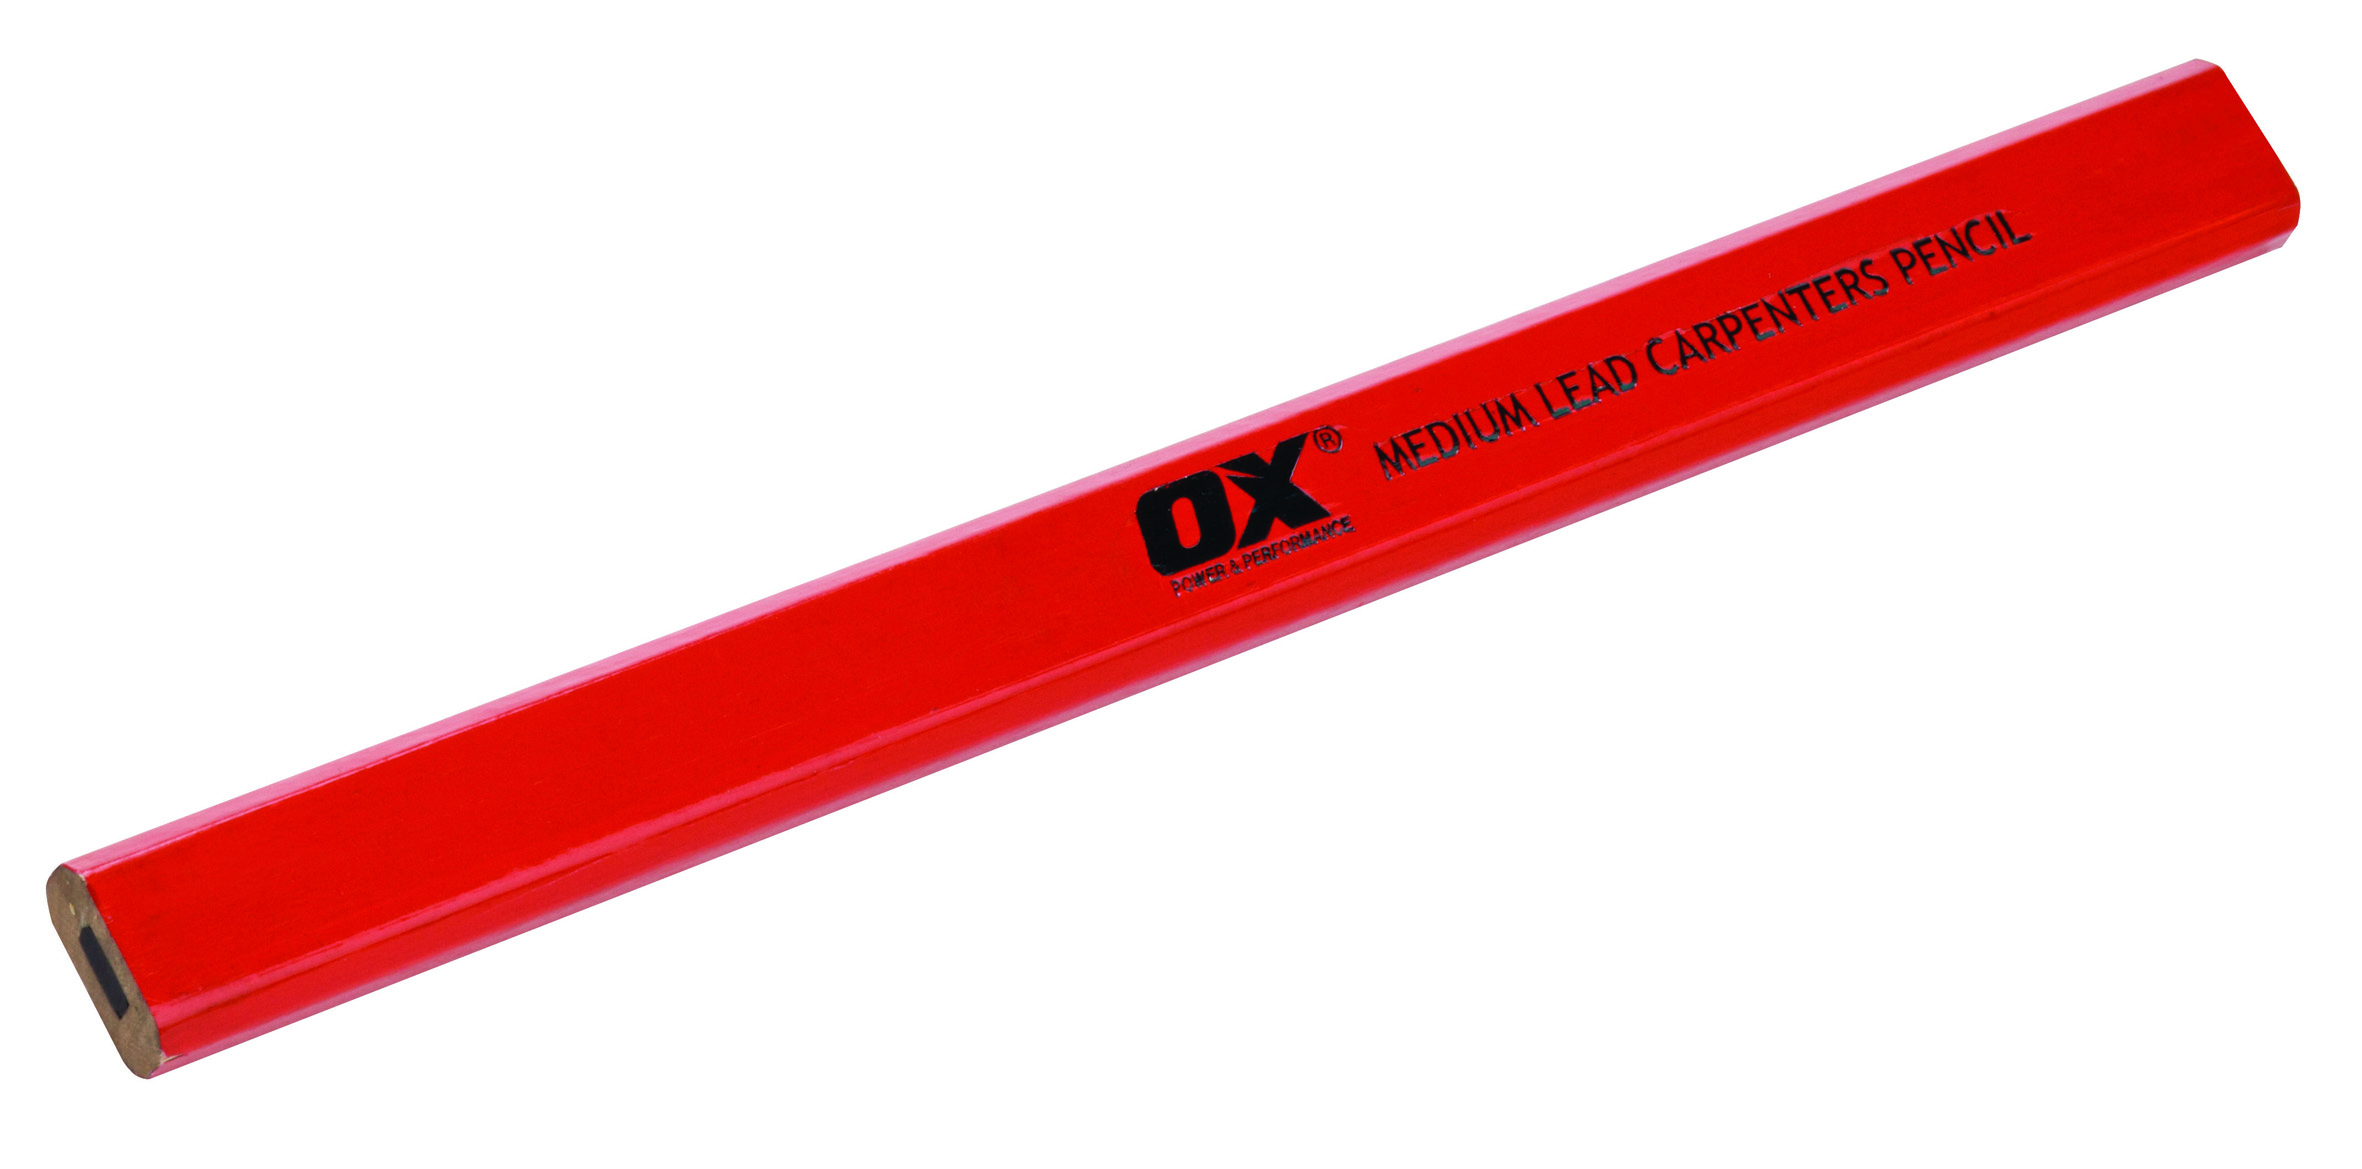 OX Tools Carpenter's Pencils10 Pack 